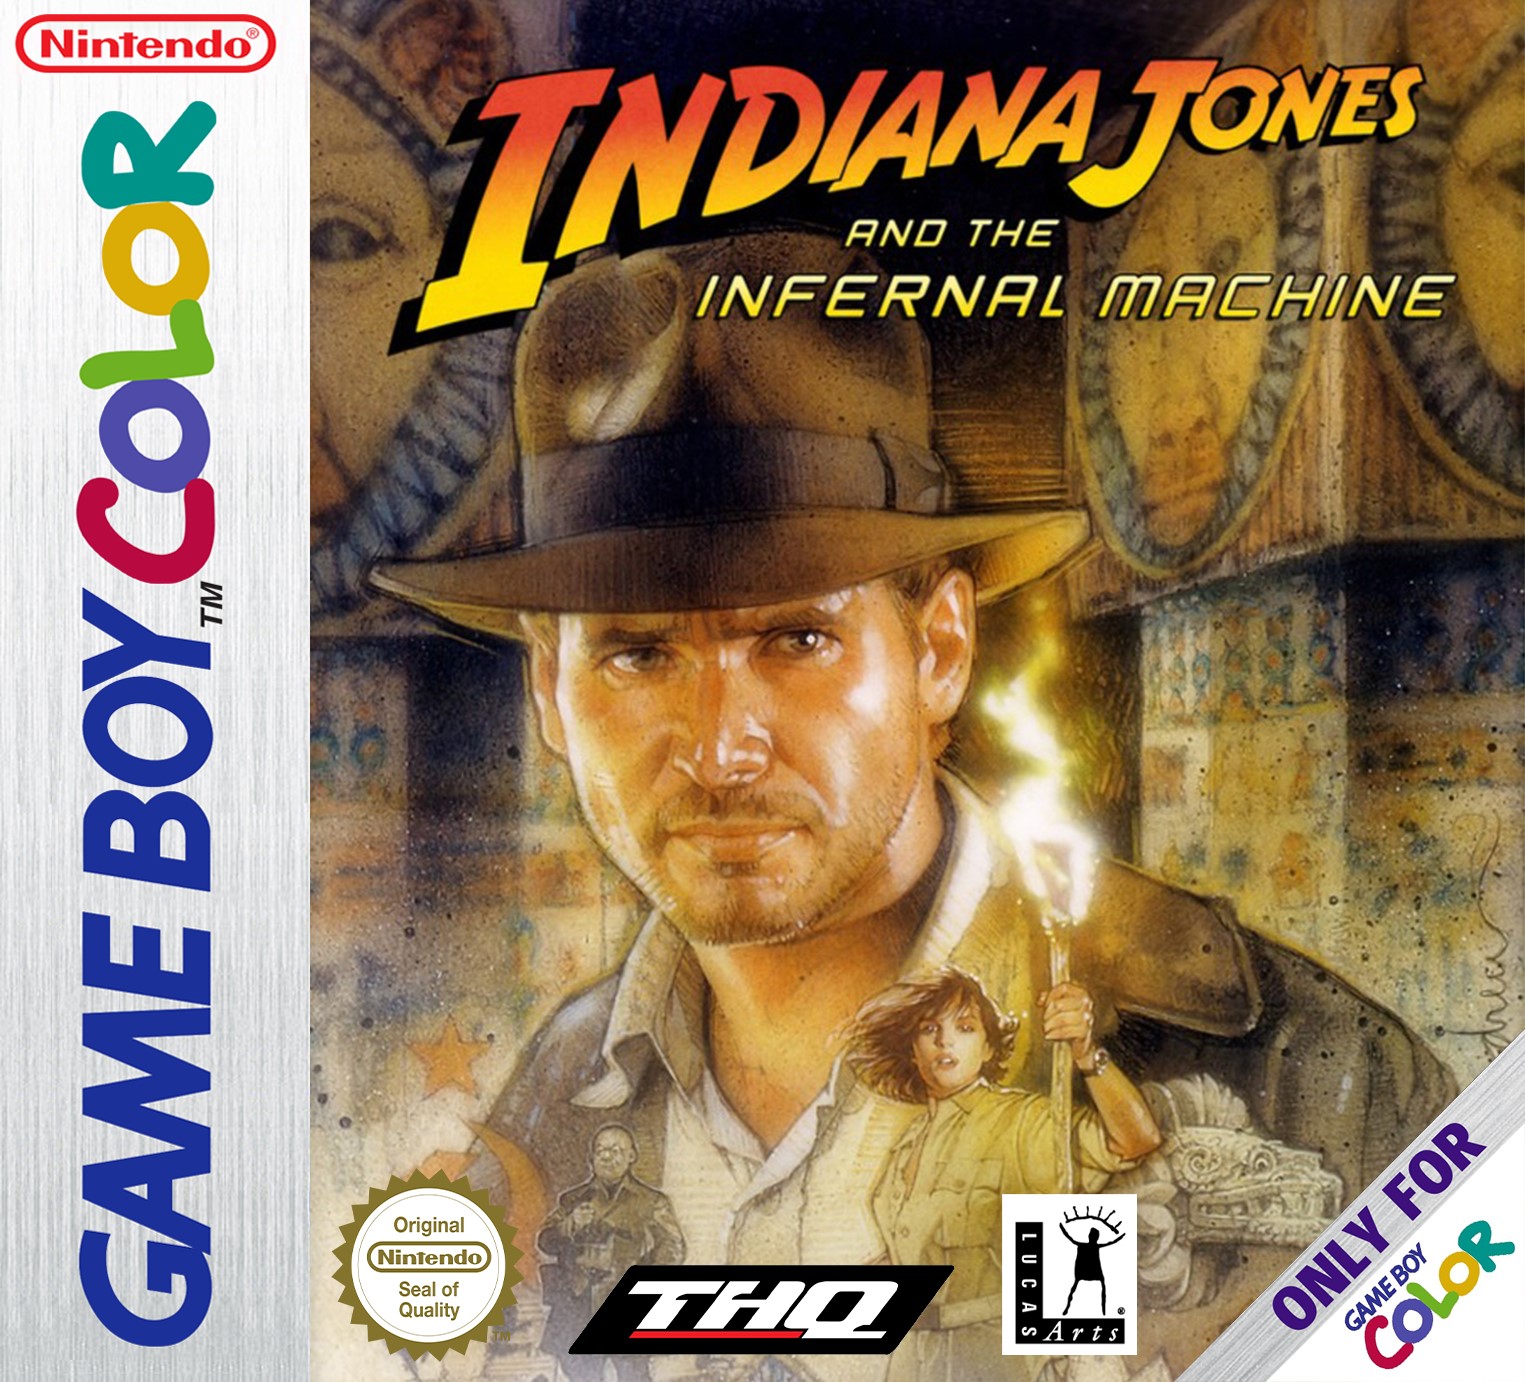 'Indiana Jones and the Infernal Machine'